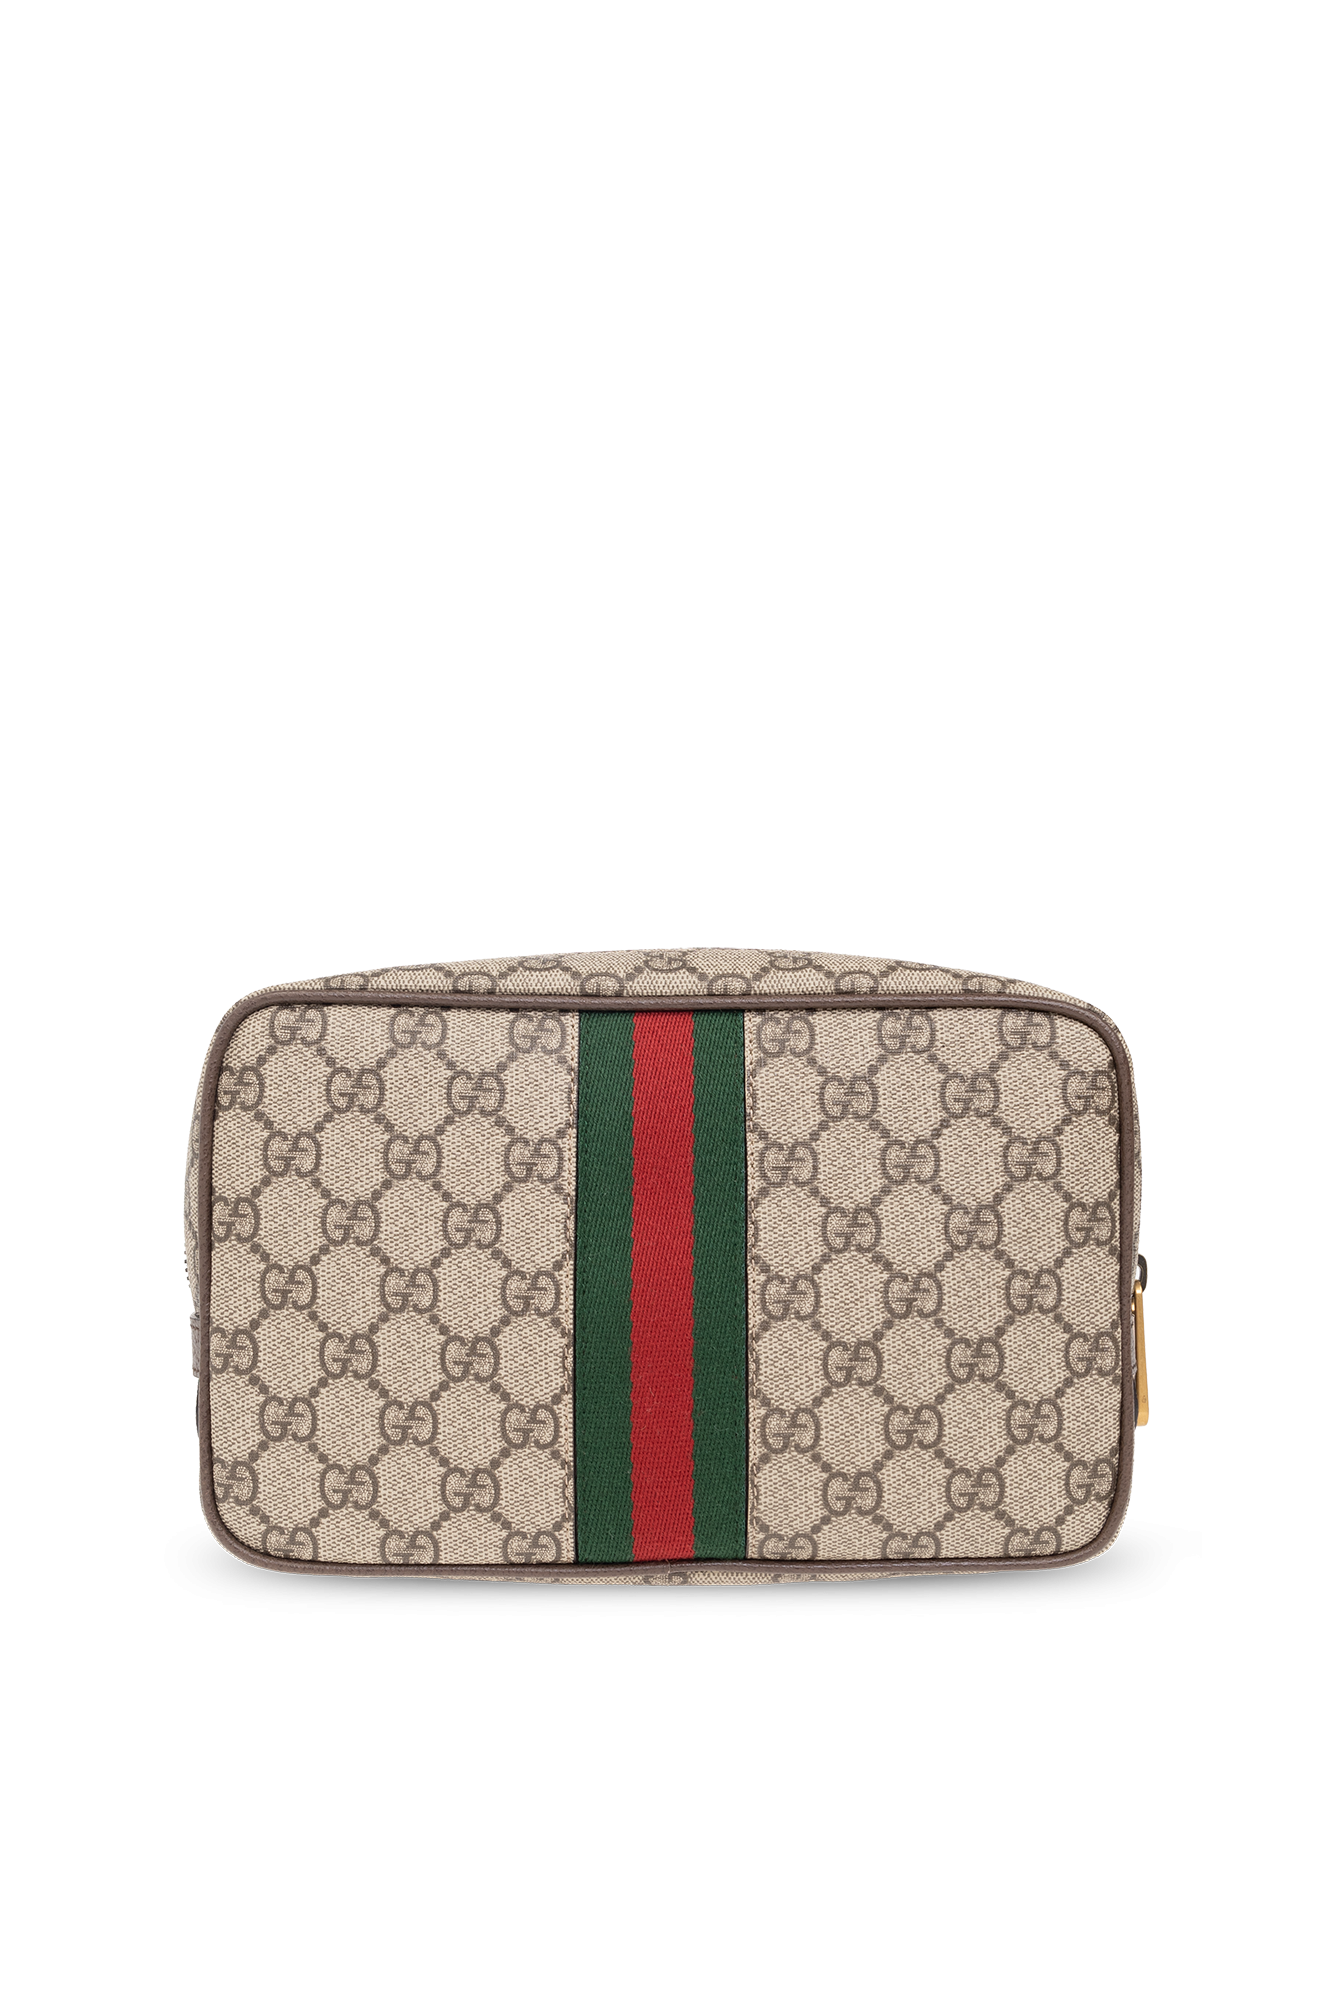 Gucci Double G handbag